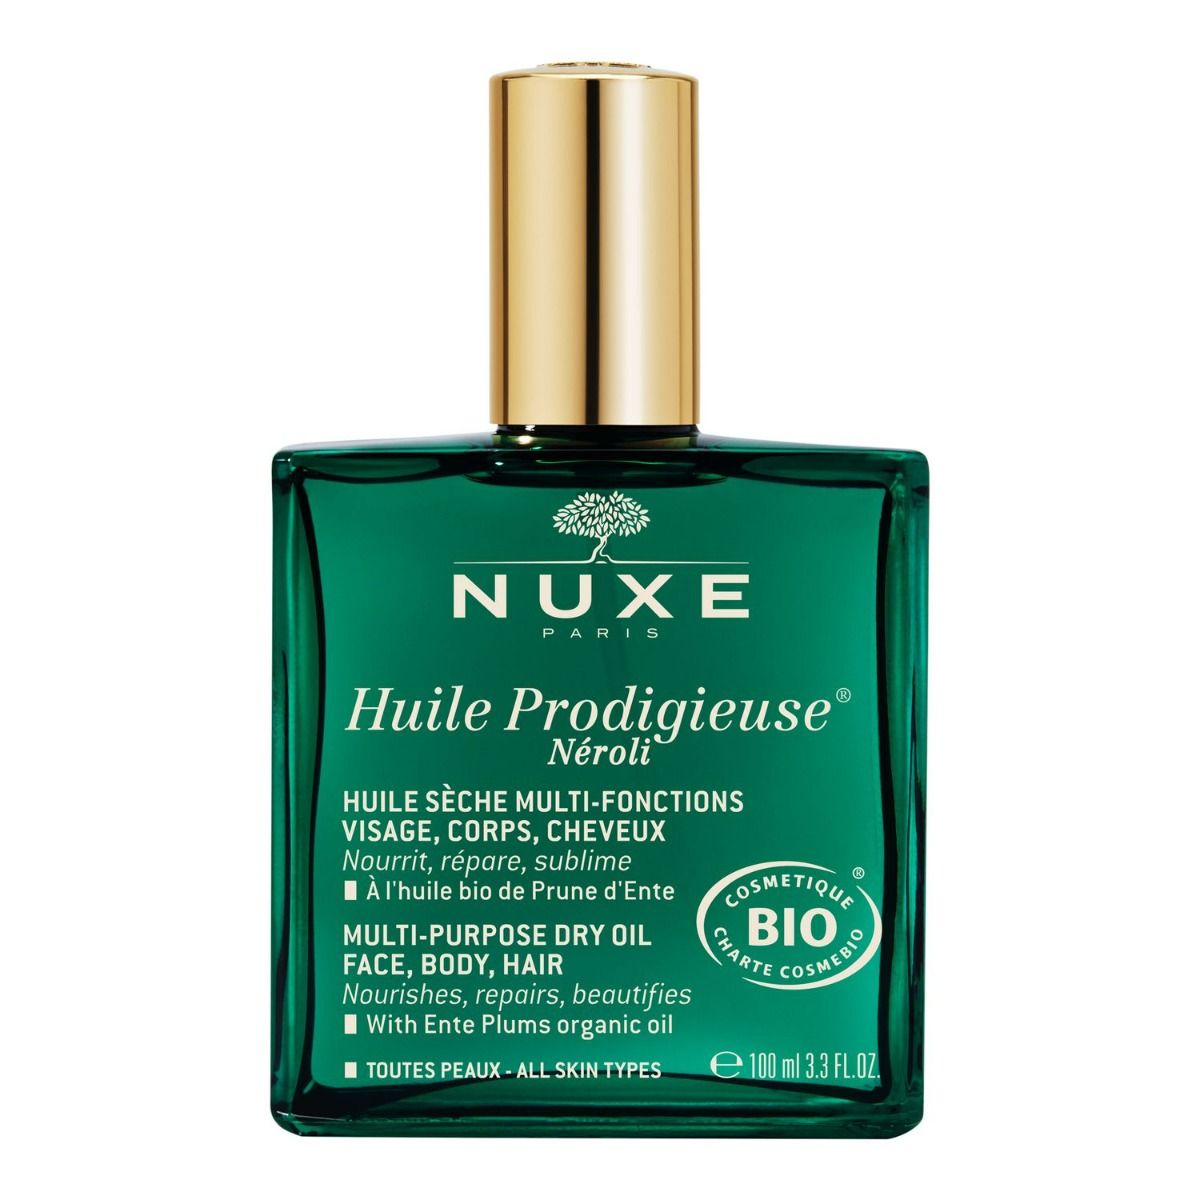 Nuxe Huile Prodigieuse Neroli масло для лица, тела и волос, 100 ml nuxe цветочное сухое масло huile prodigieuse florale 50 мл nuxe prodigieuse